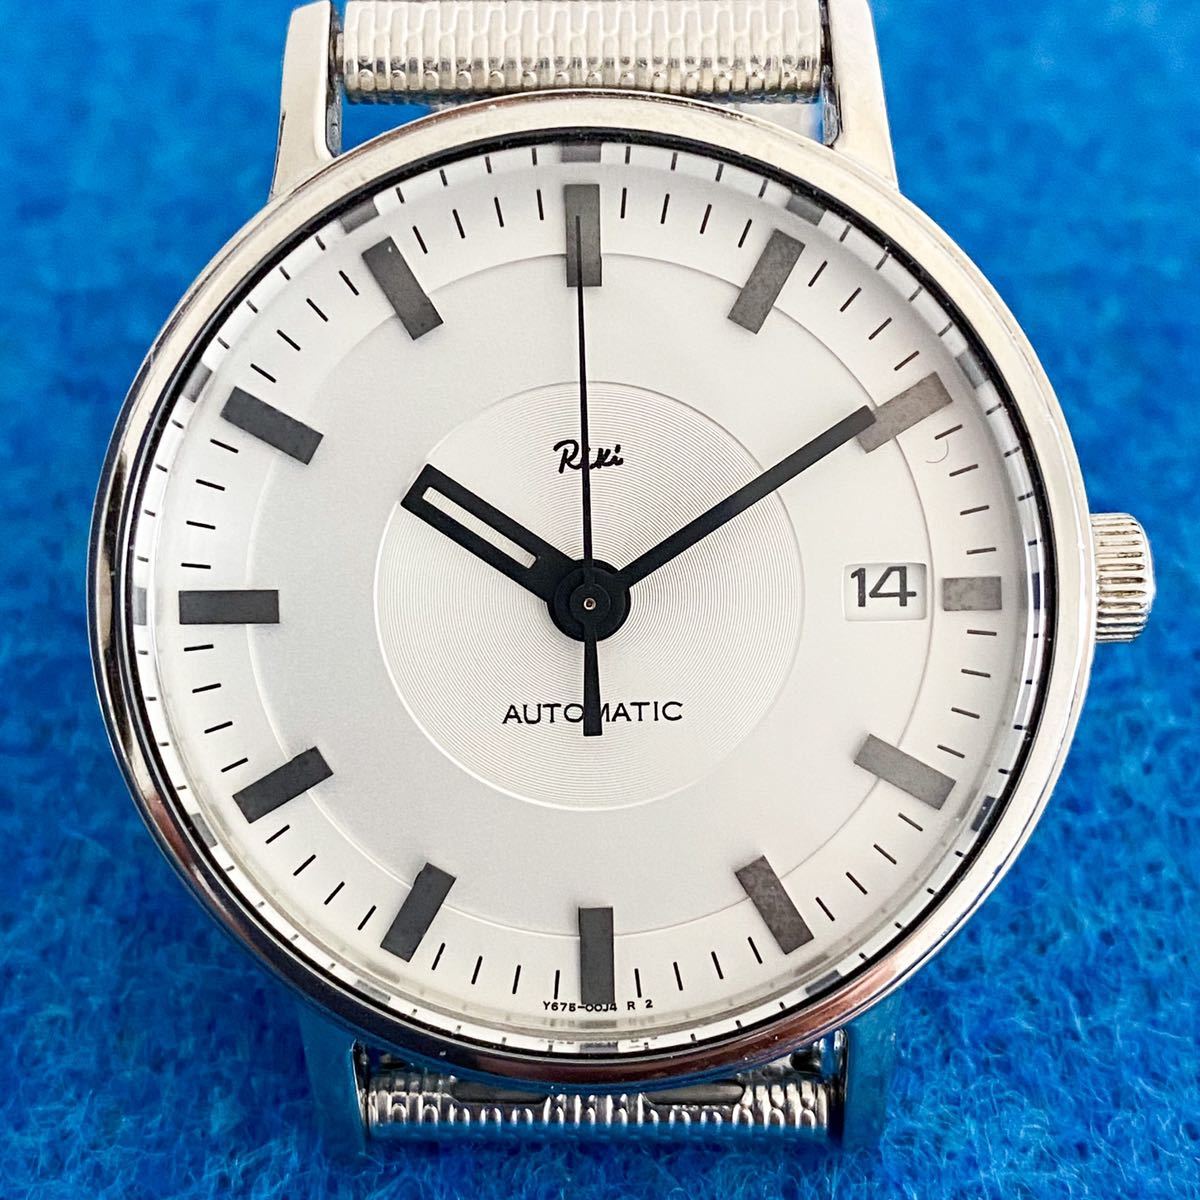 SEIKO 渡辺力自動巻腕時計RIKI COLLECTION Y675-00G0 ALBA メンズ腕時計廃盤品セイコーアルバ的详细信息|  雅虎拍卖代拍| FROM JAPAN